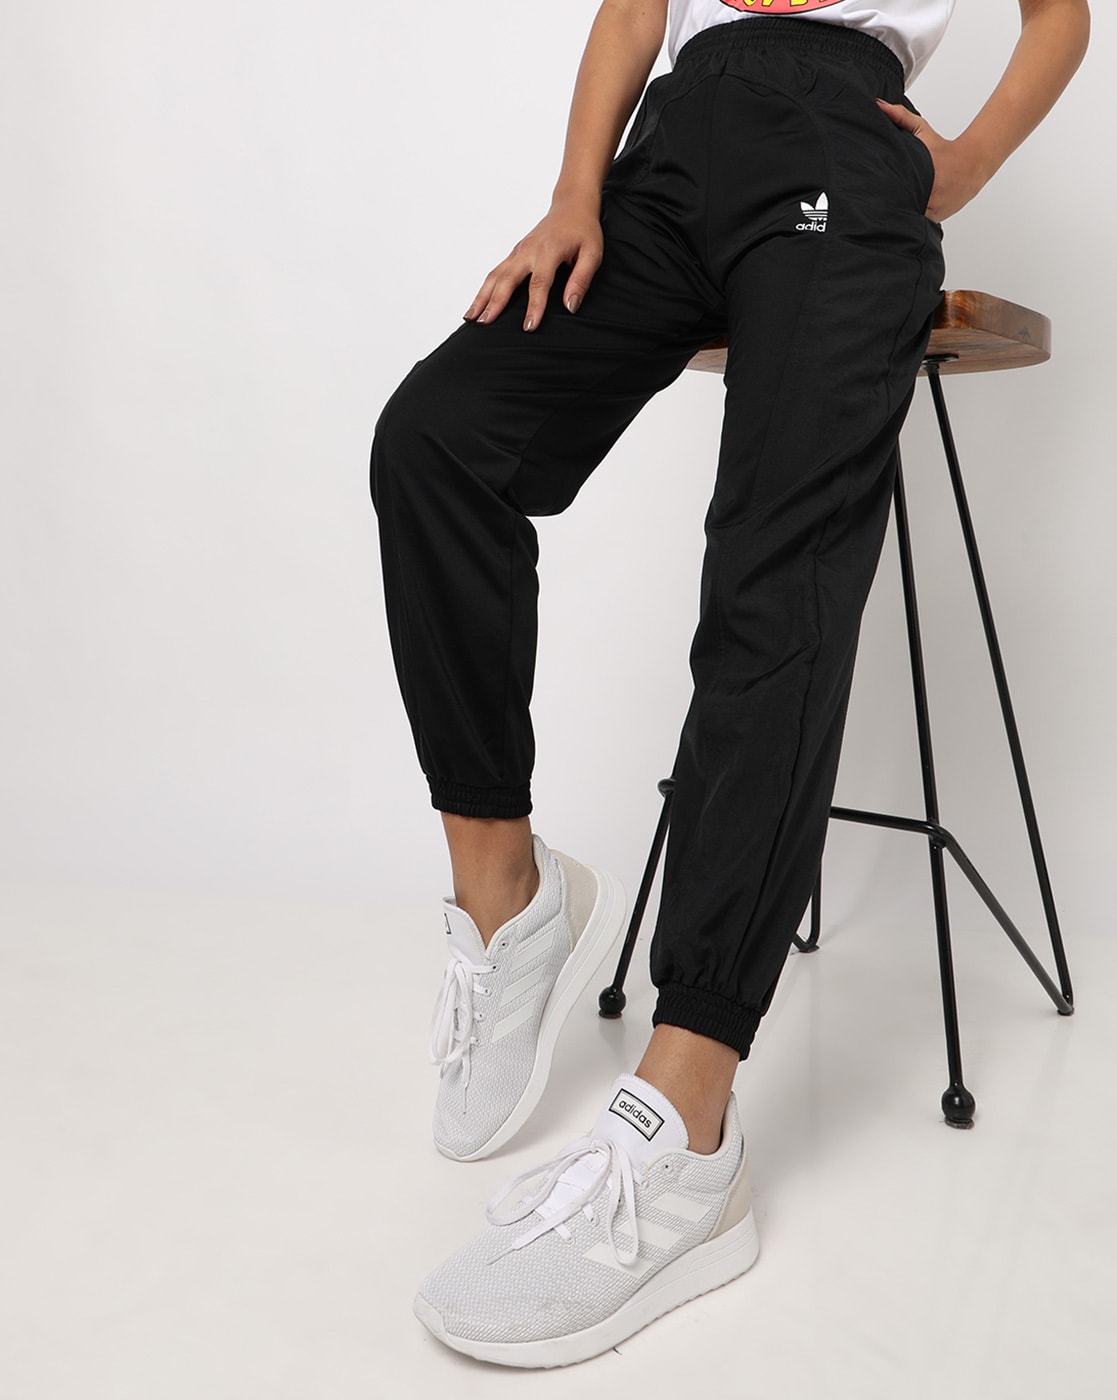 Buy Black Track Pants for Women Adidas Originals Online Ajio.com